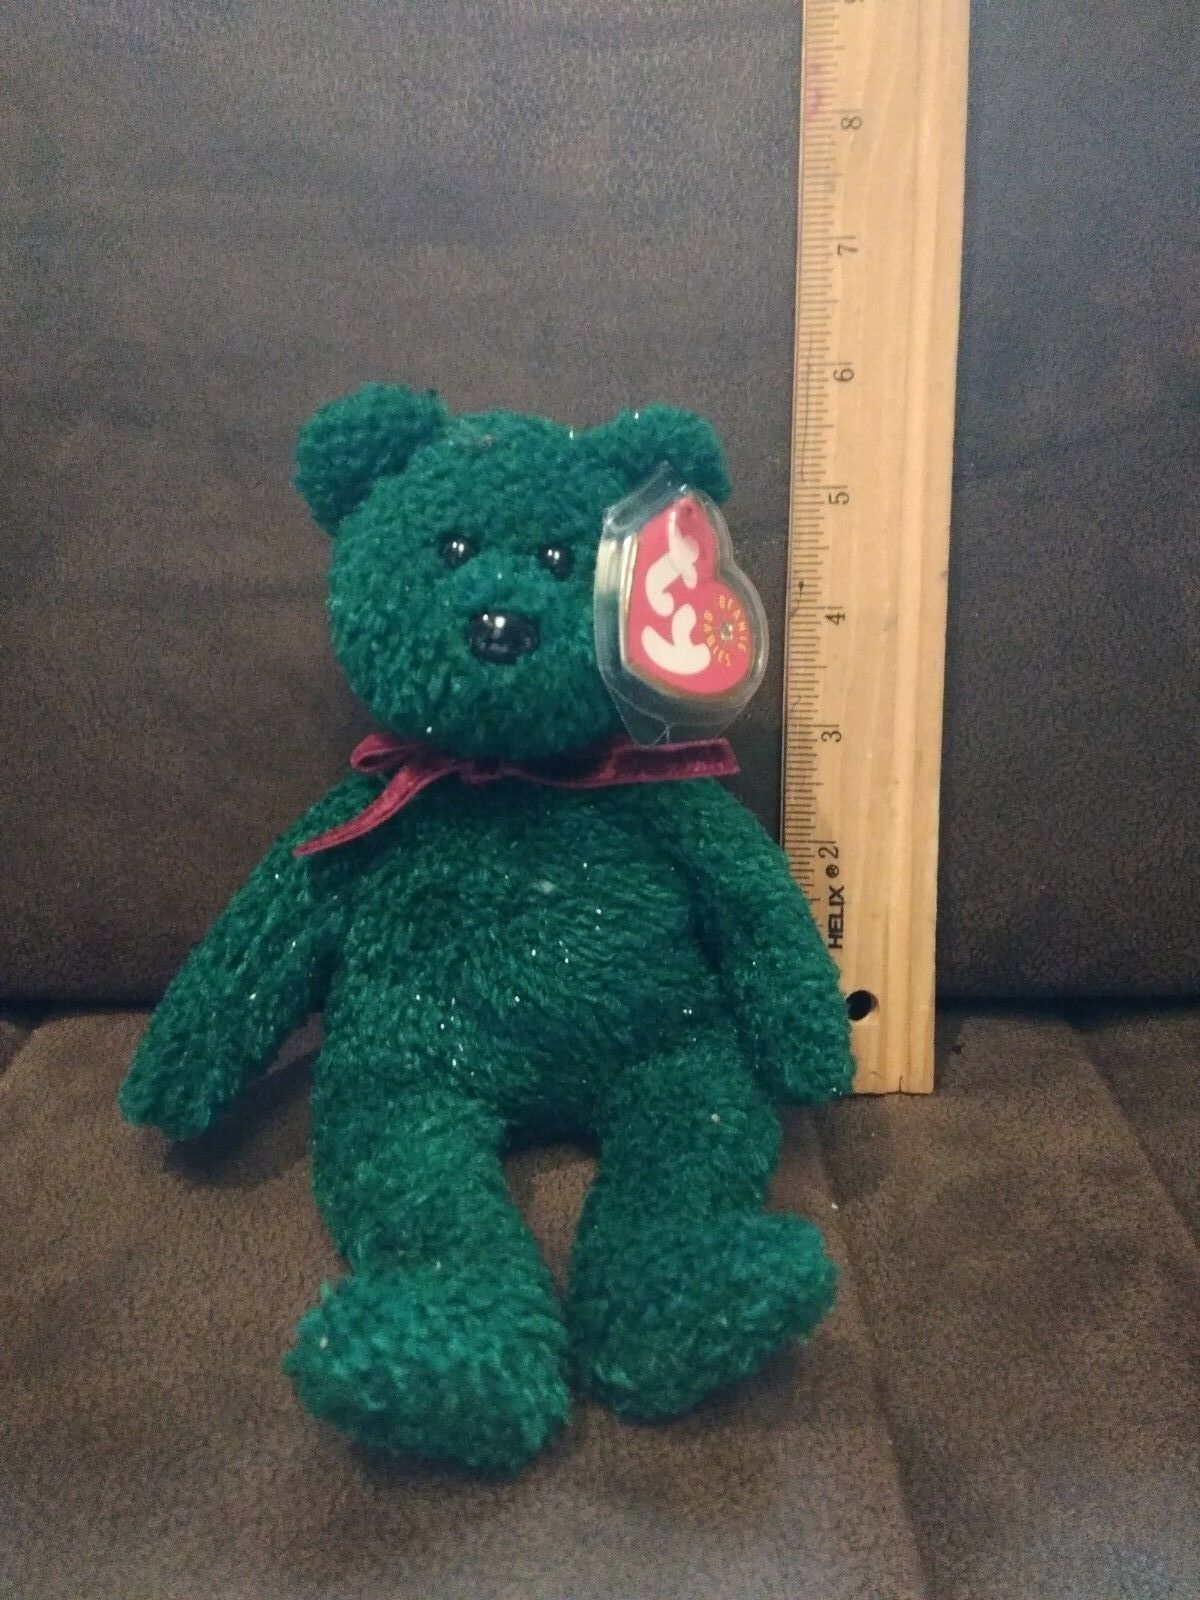 2001 holiday teddy beanie baby